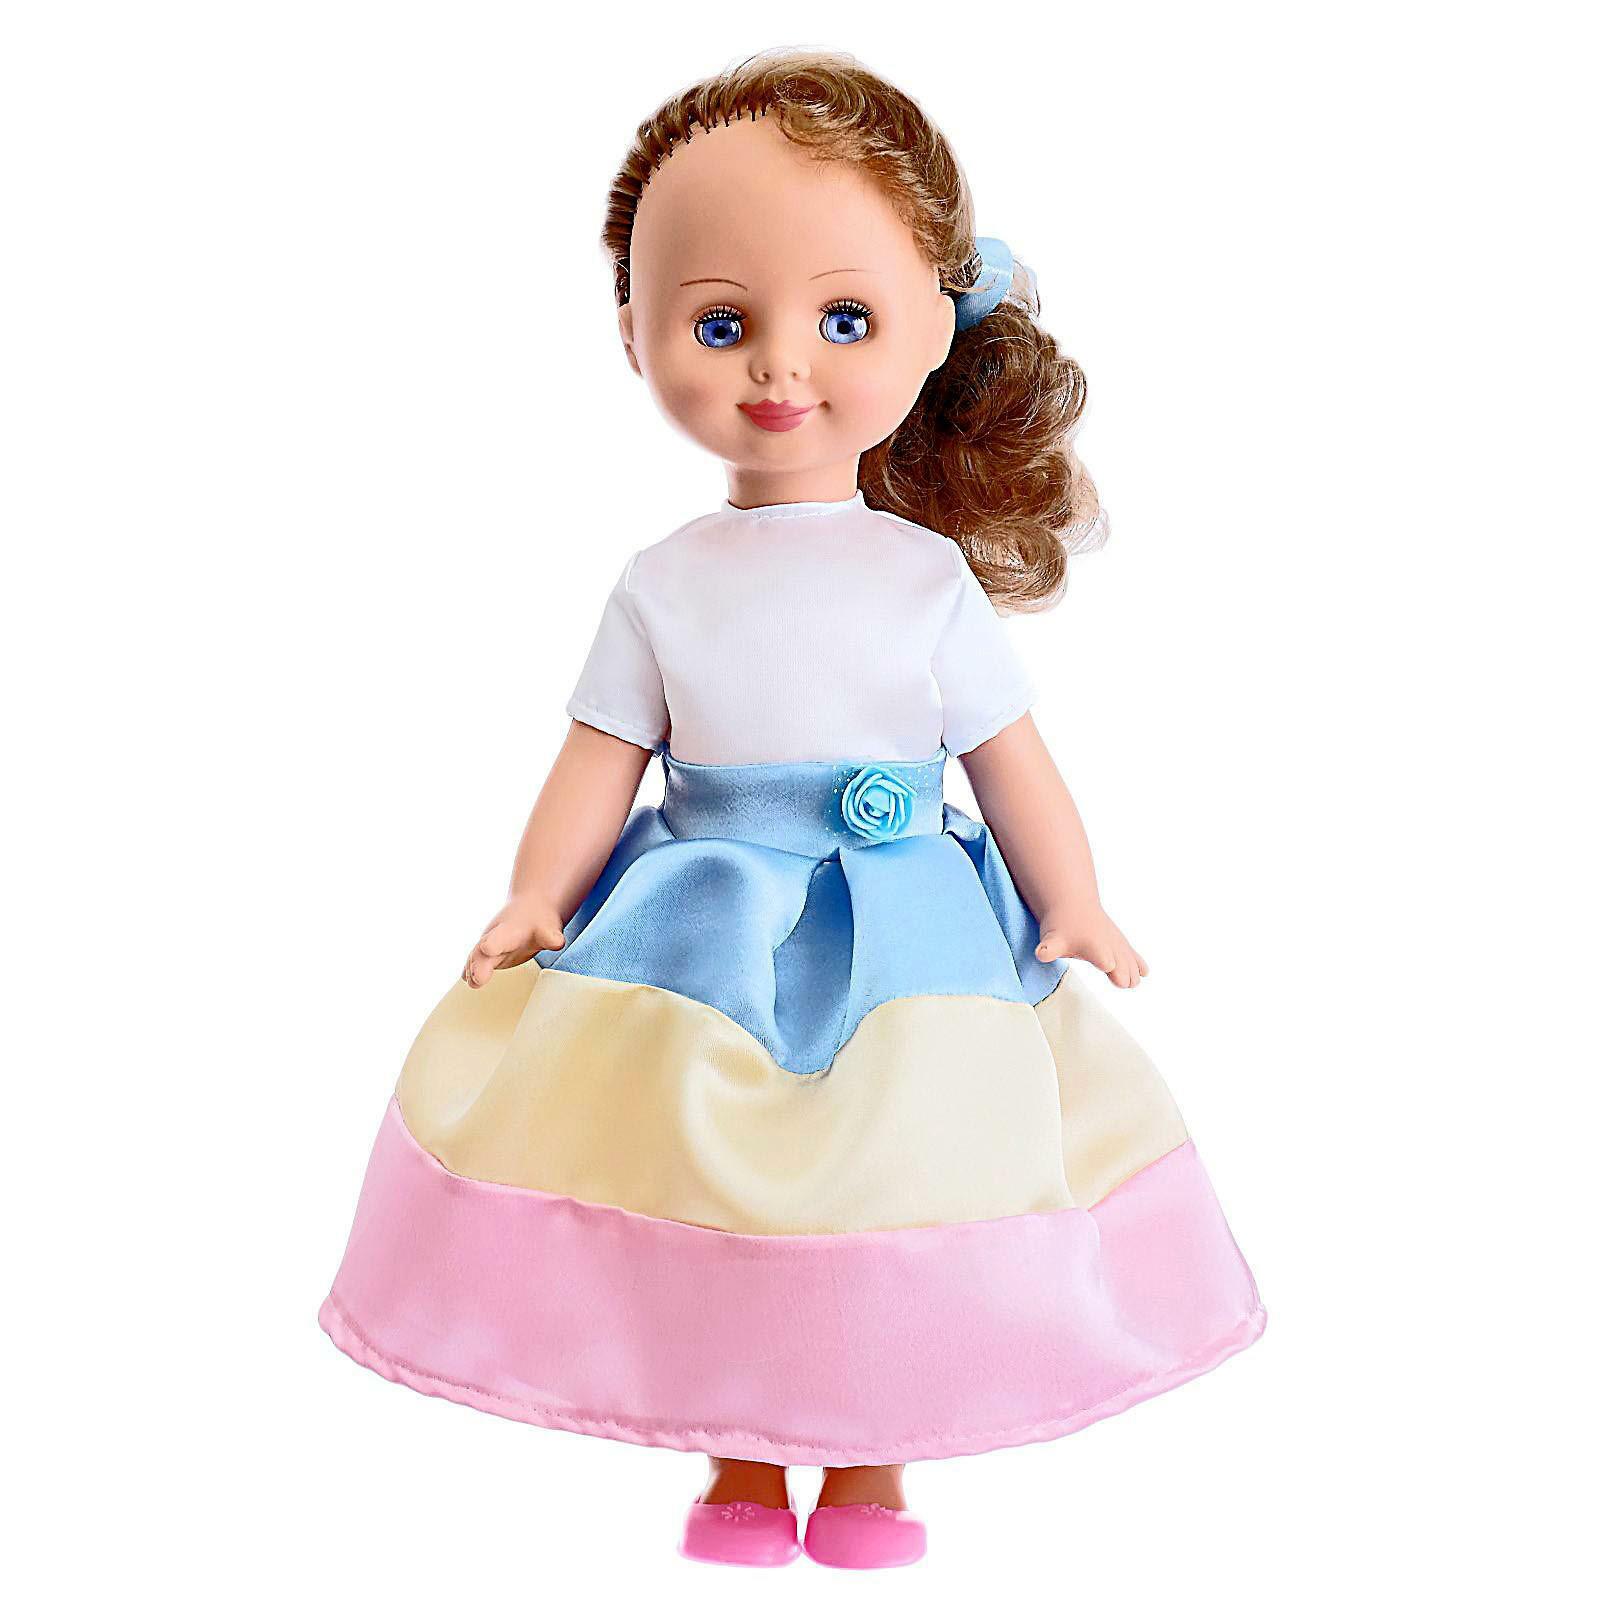 Кукла купить саратов. Кукла «парикмахер», микс. Кукла Agata 40 см.